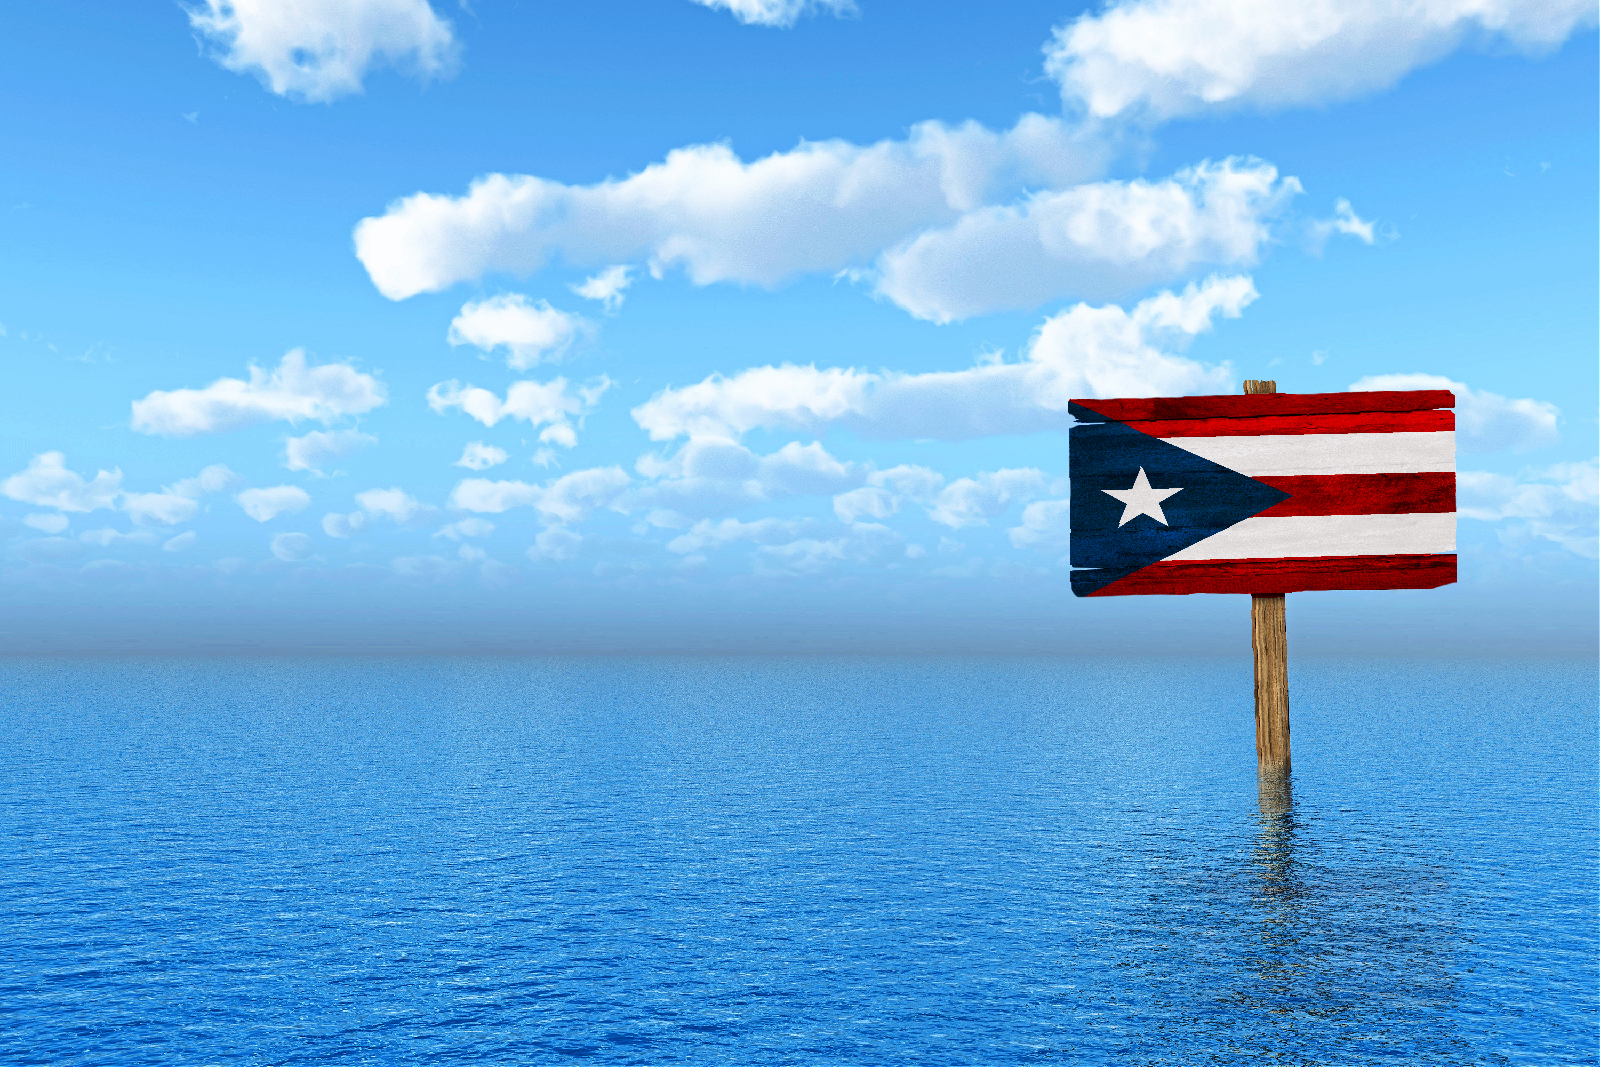 Puerto Rico climate change